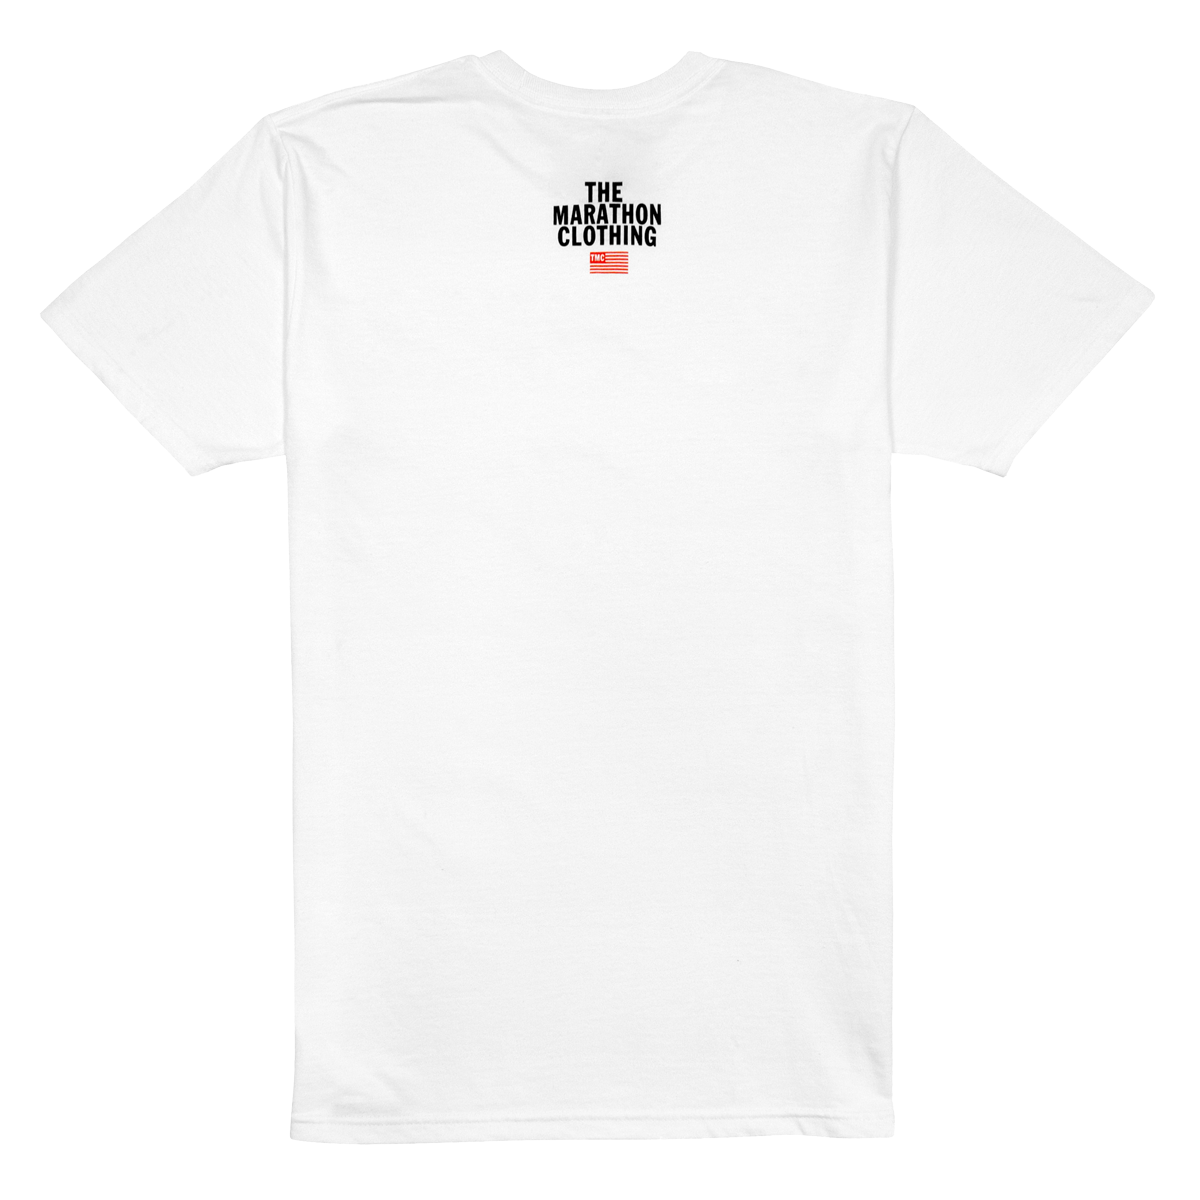 Greatest Hits Kid's T-Shirt - White-The Marathon Clothing